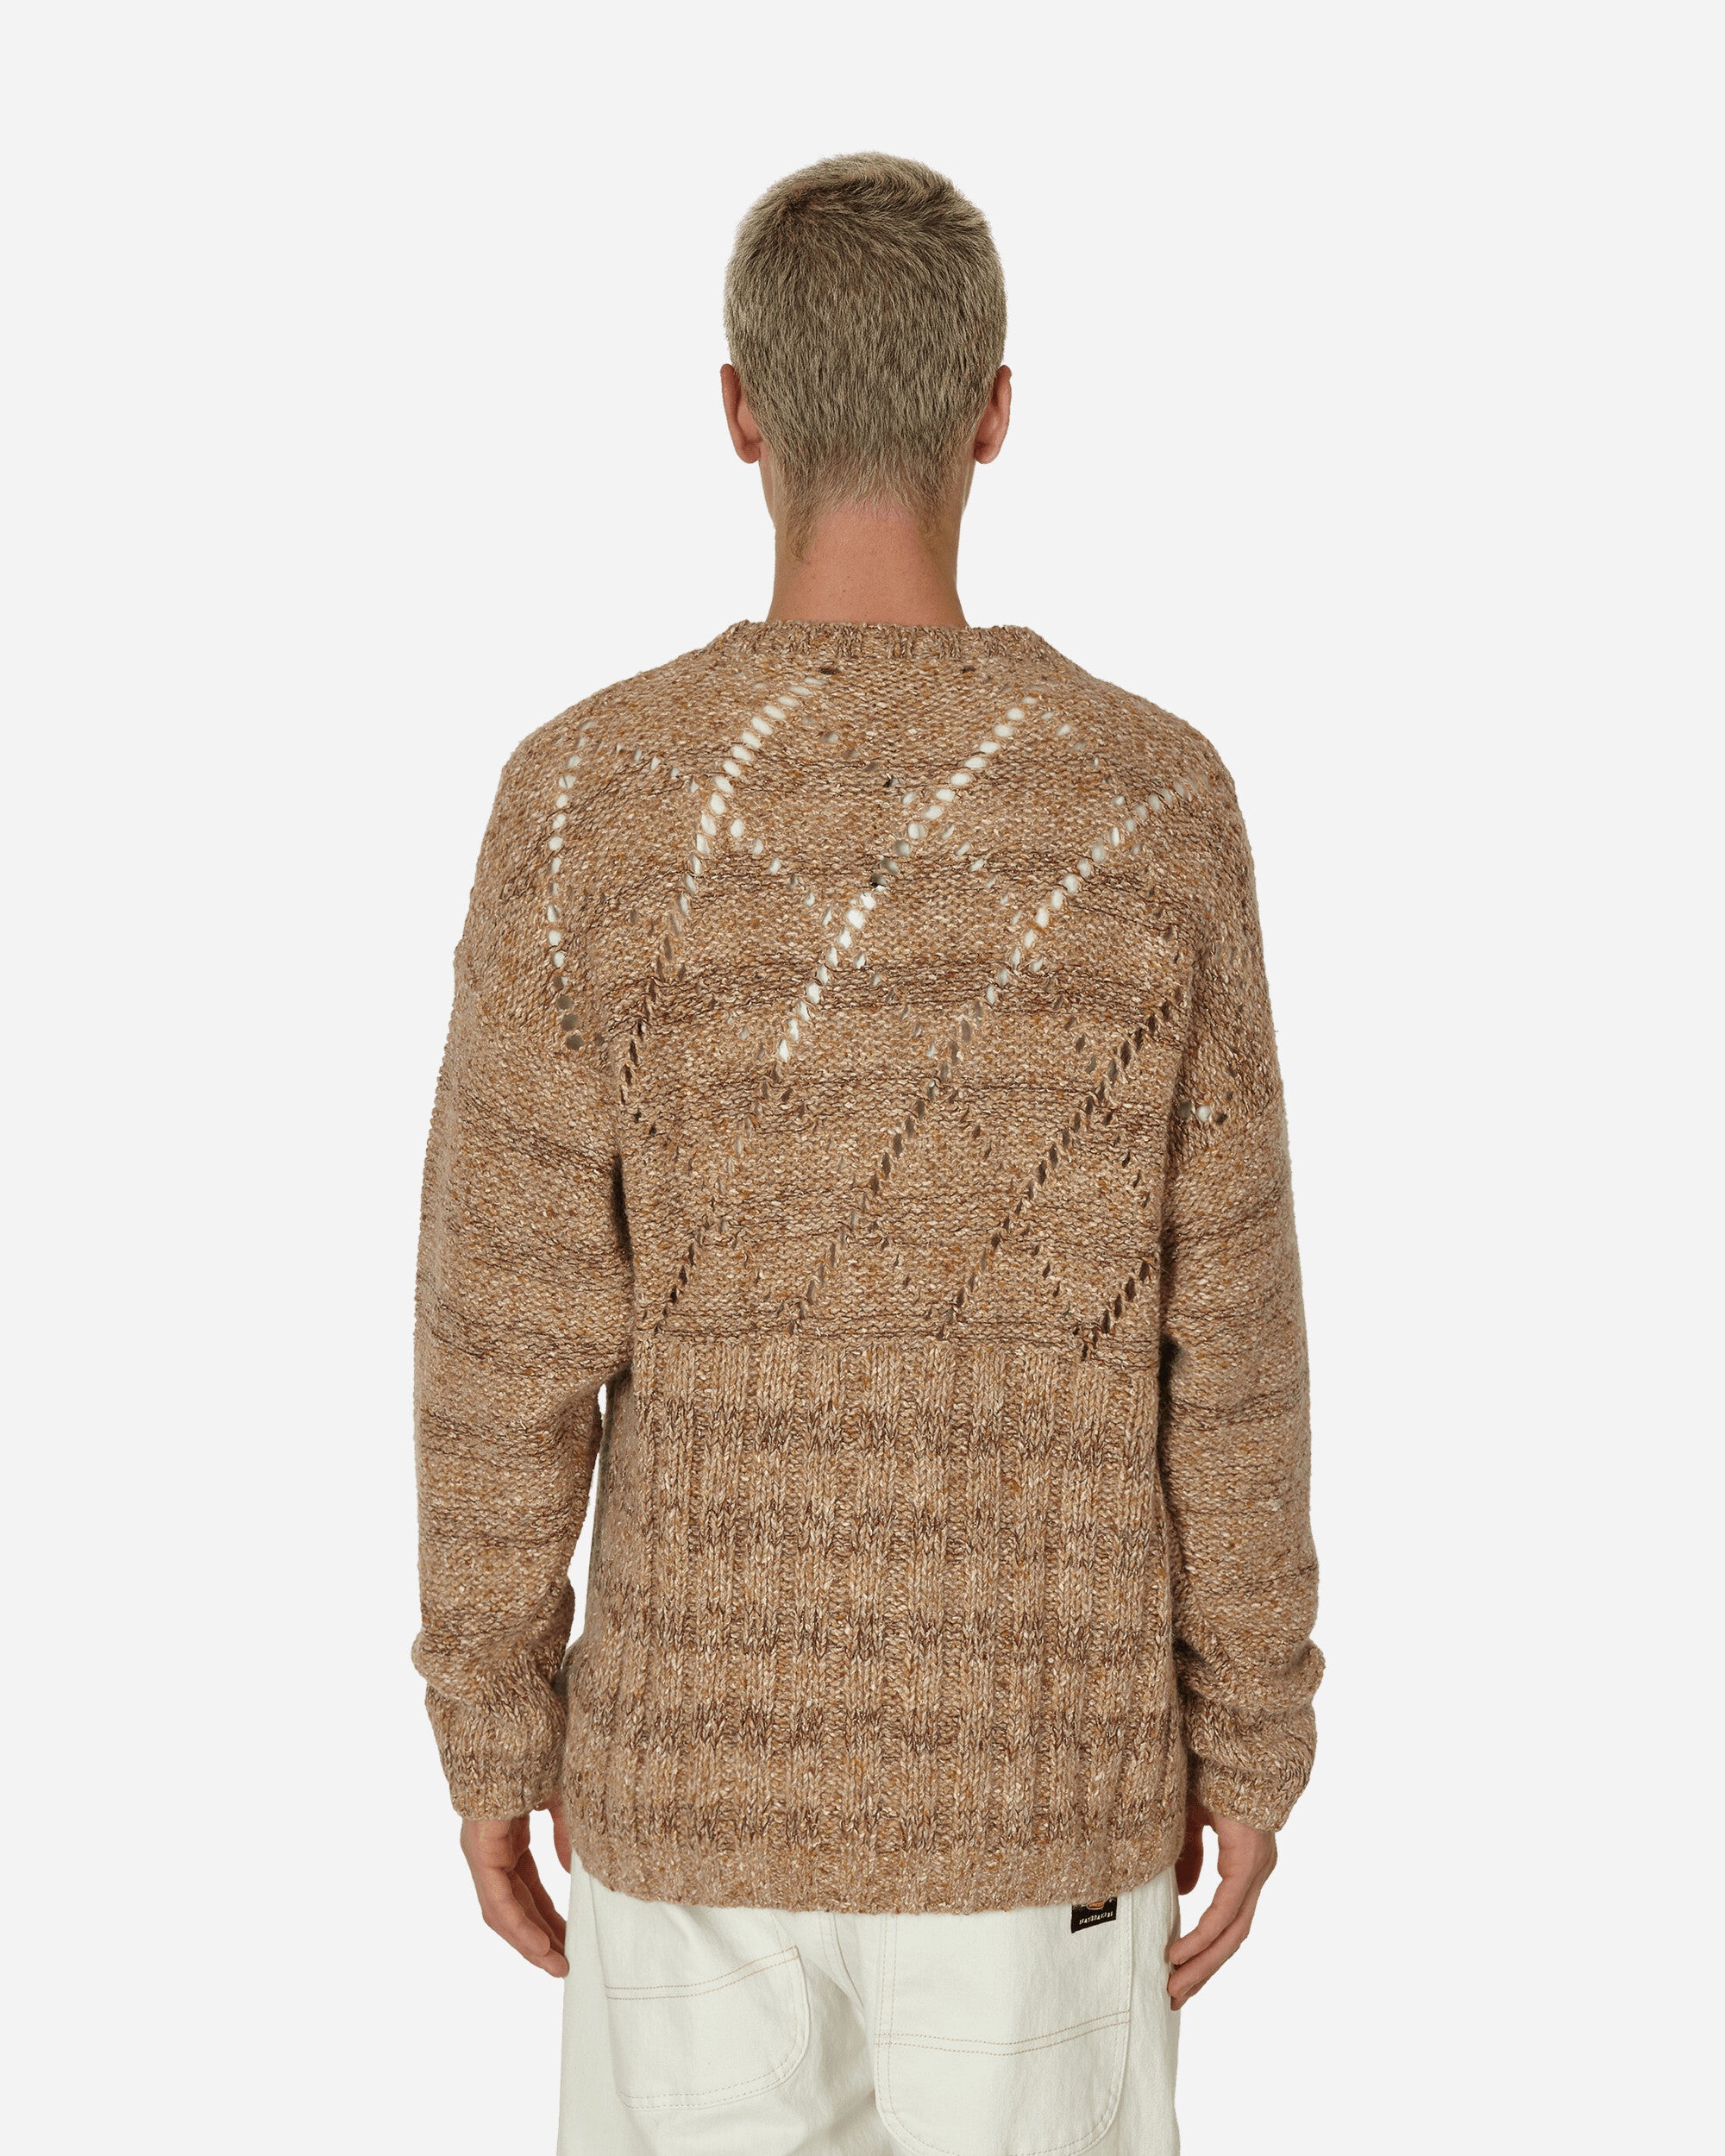 Cormio Antonio Oversized Embroidered Sweater Beige & Rame Knitwears Sweaters ANTONIO BEIGE